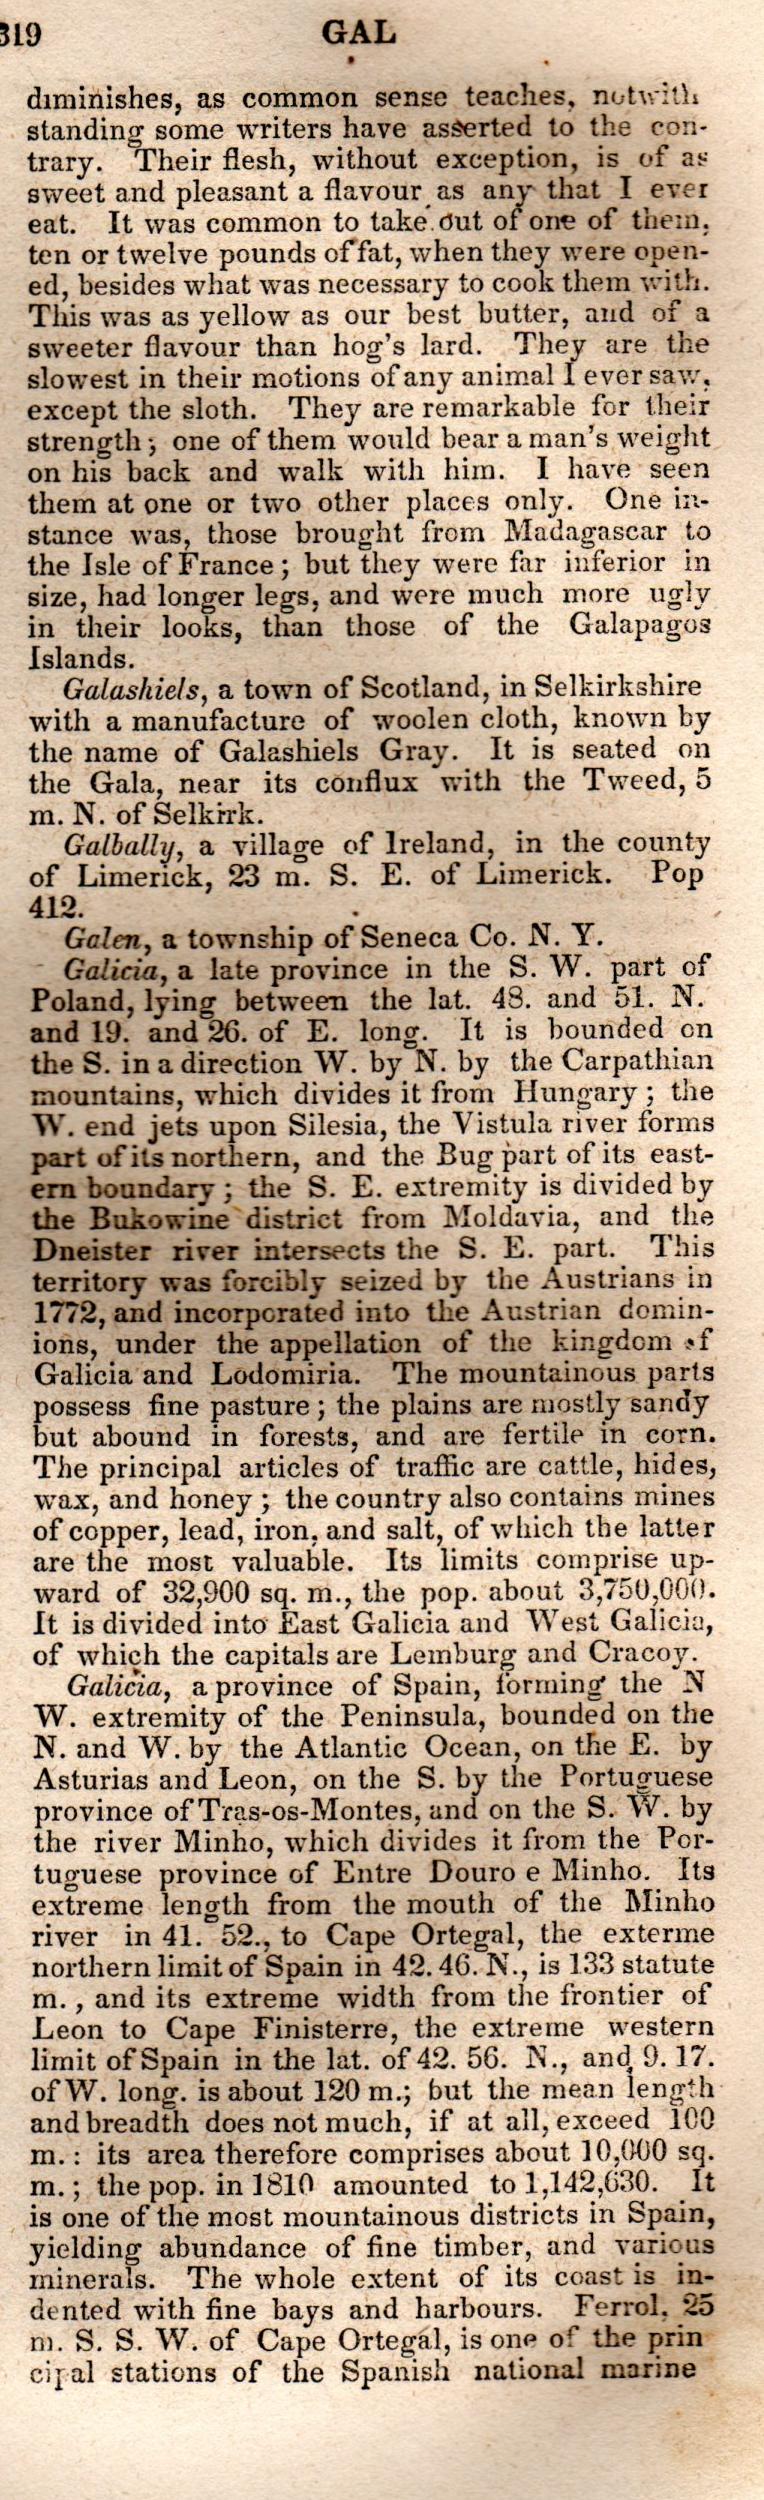 Brookes’ Universal Gazetteer (1850), Page 319 Right Column